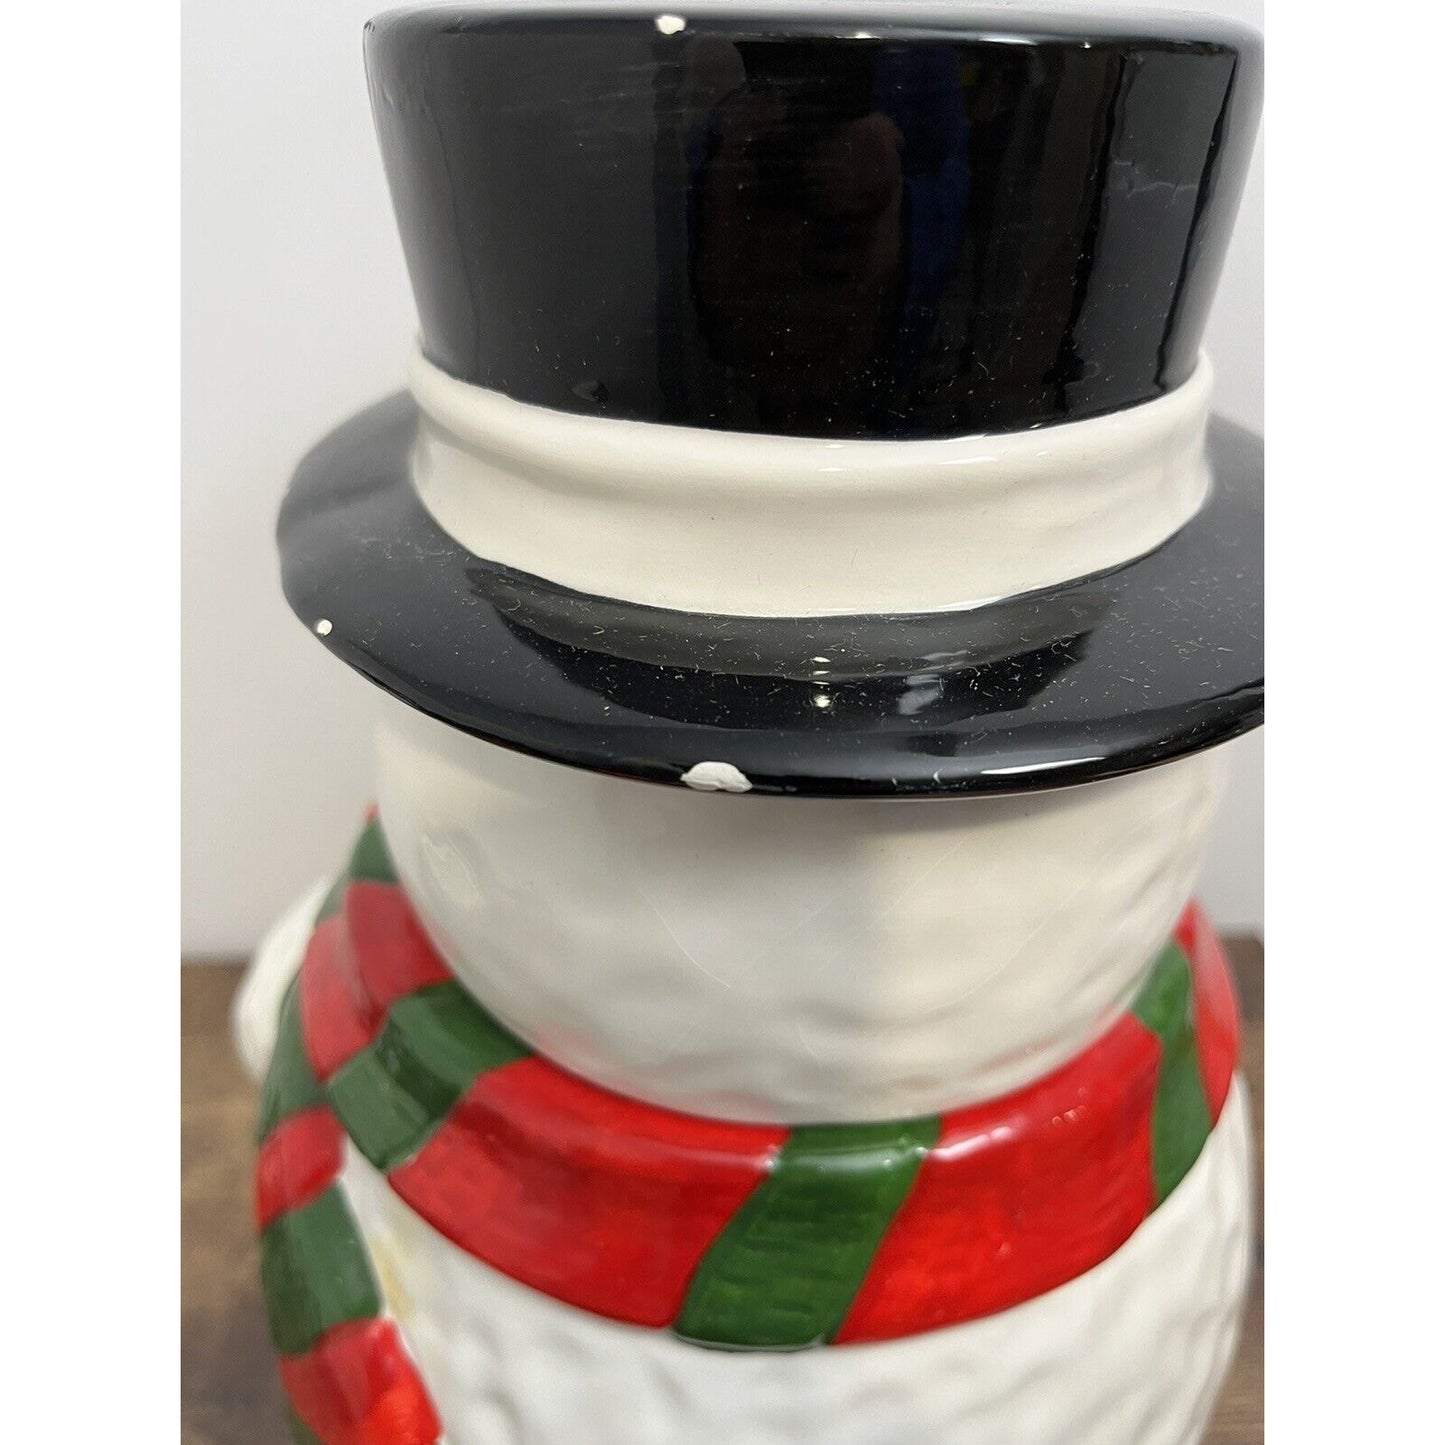 VINTAGE Celebrate The Season Ceramic Snowman Cookie Jar Christmas Holiday Decor